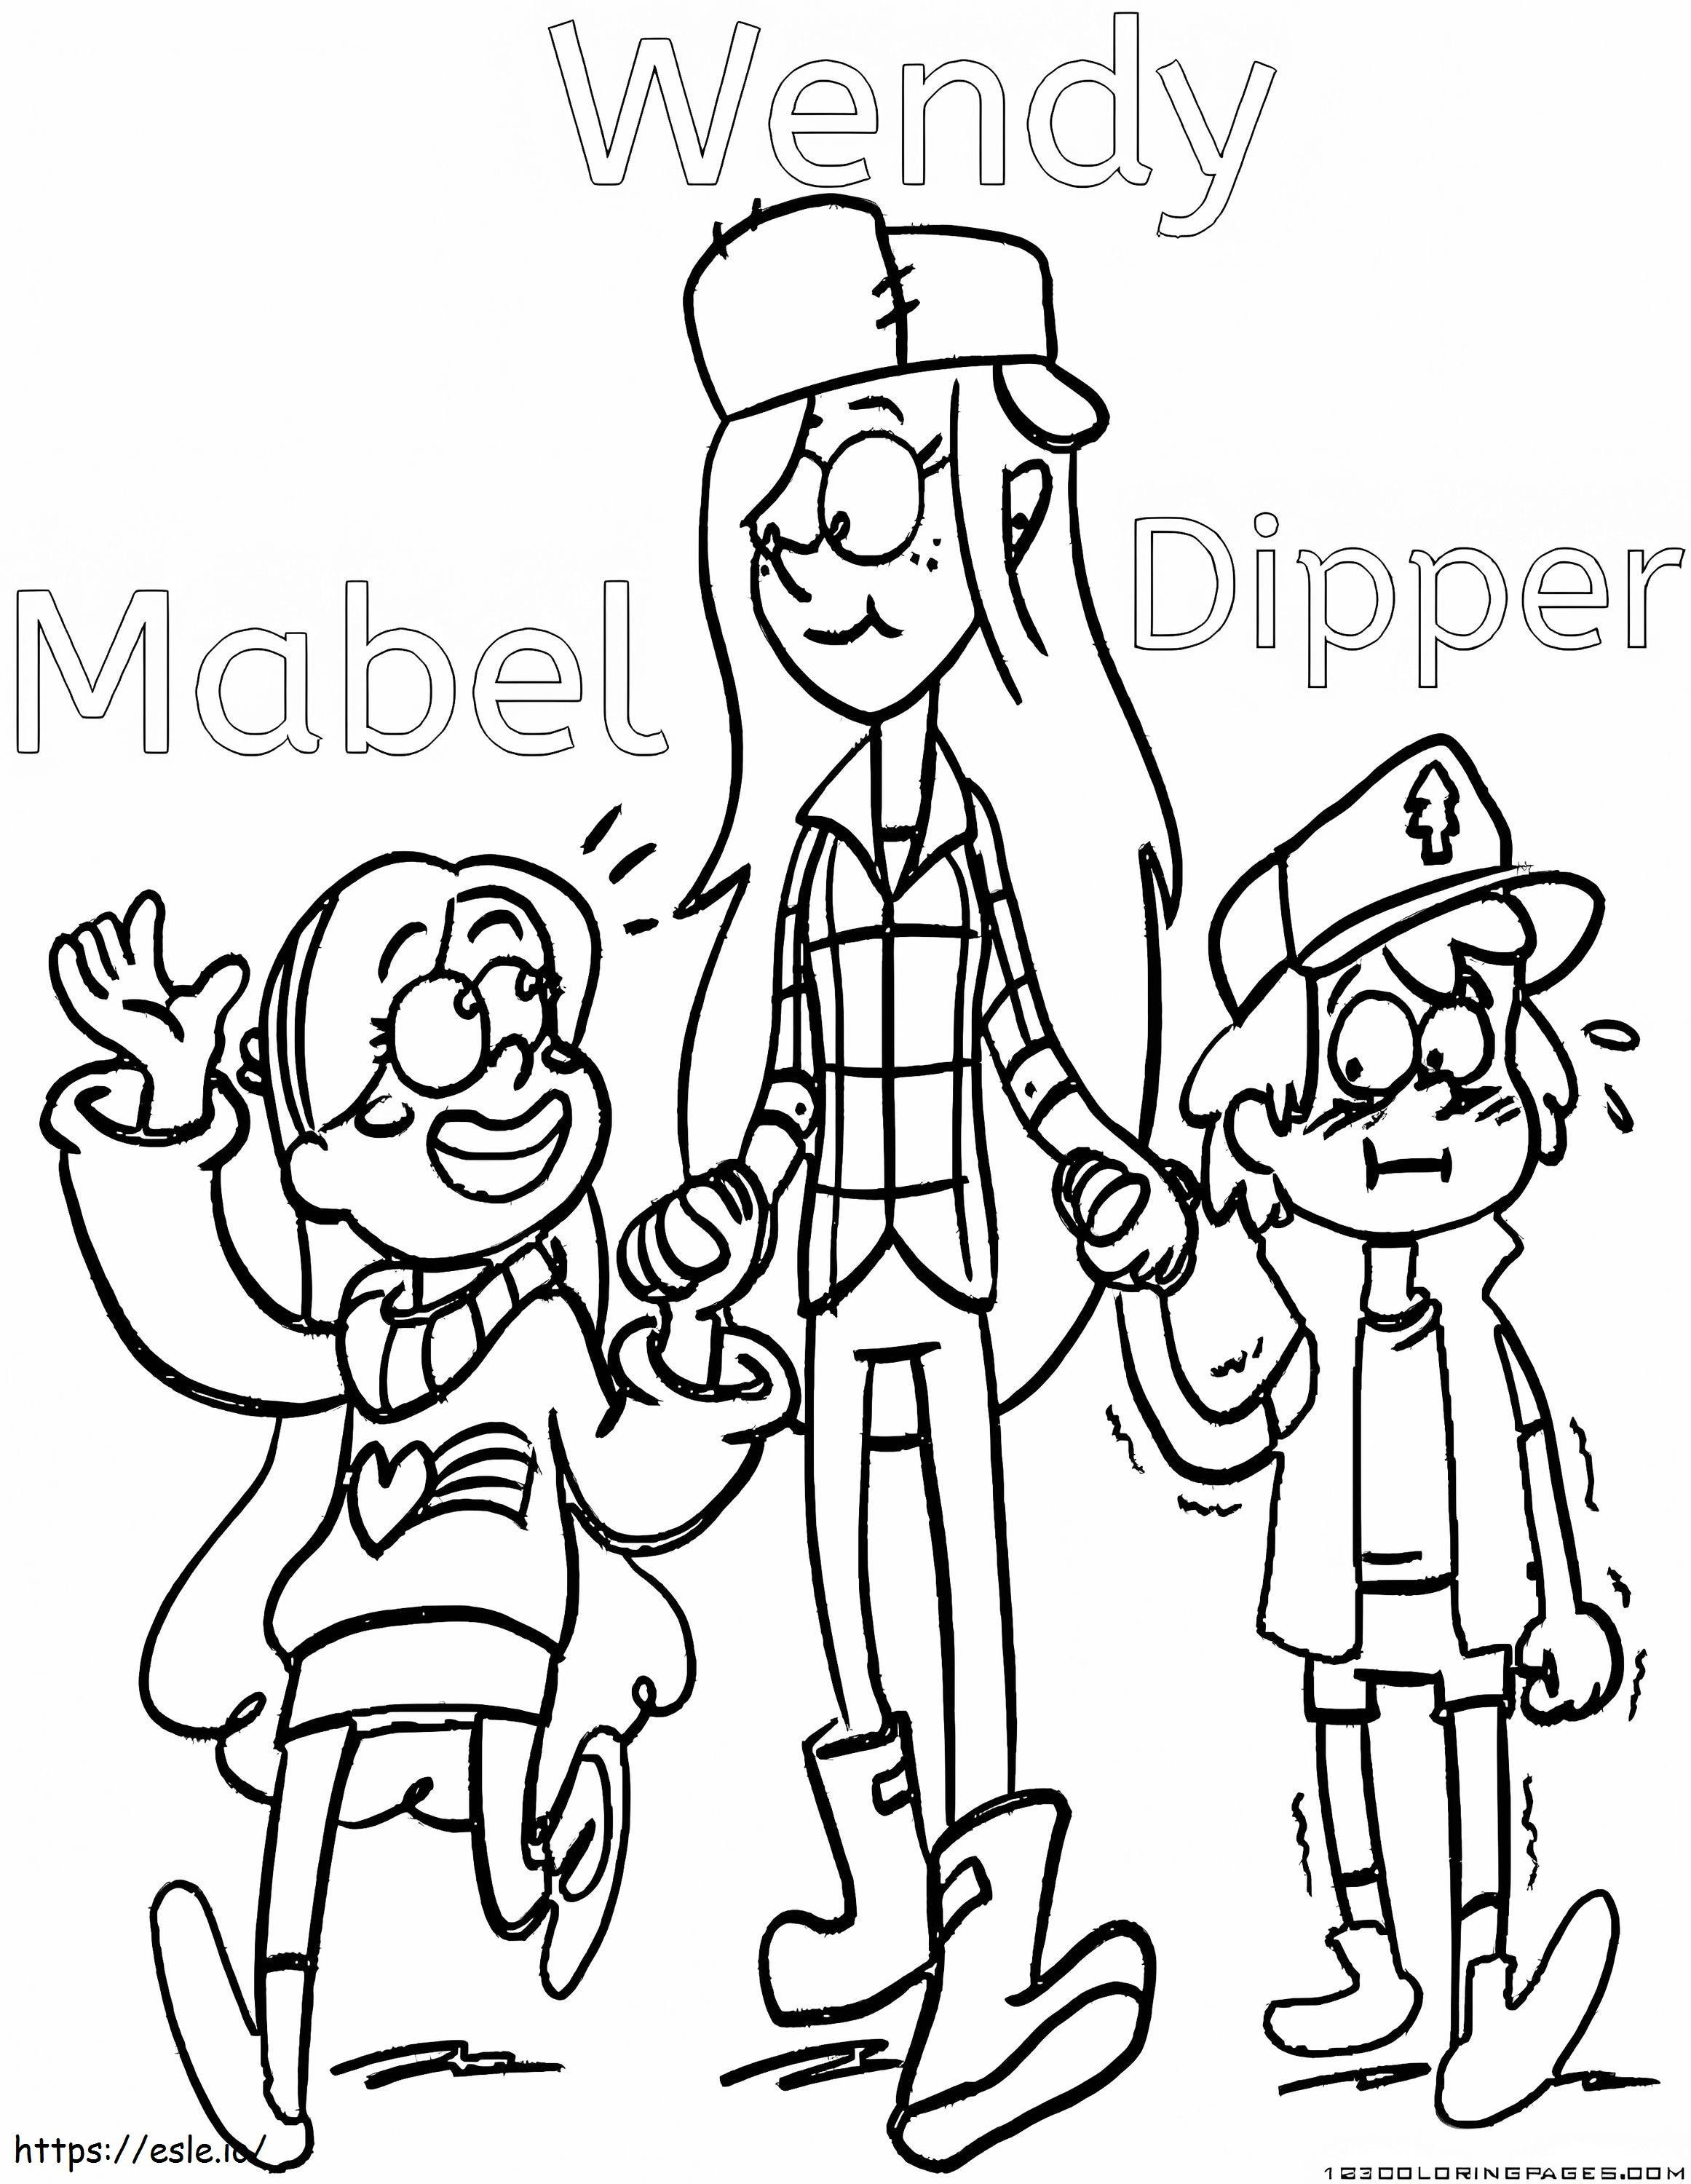 Wendy Dipper și Mabel de colorat